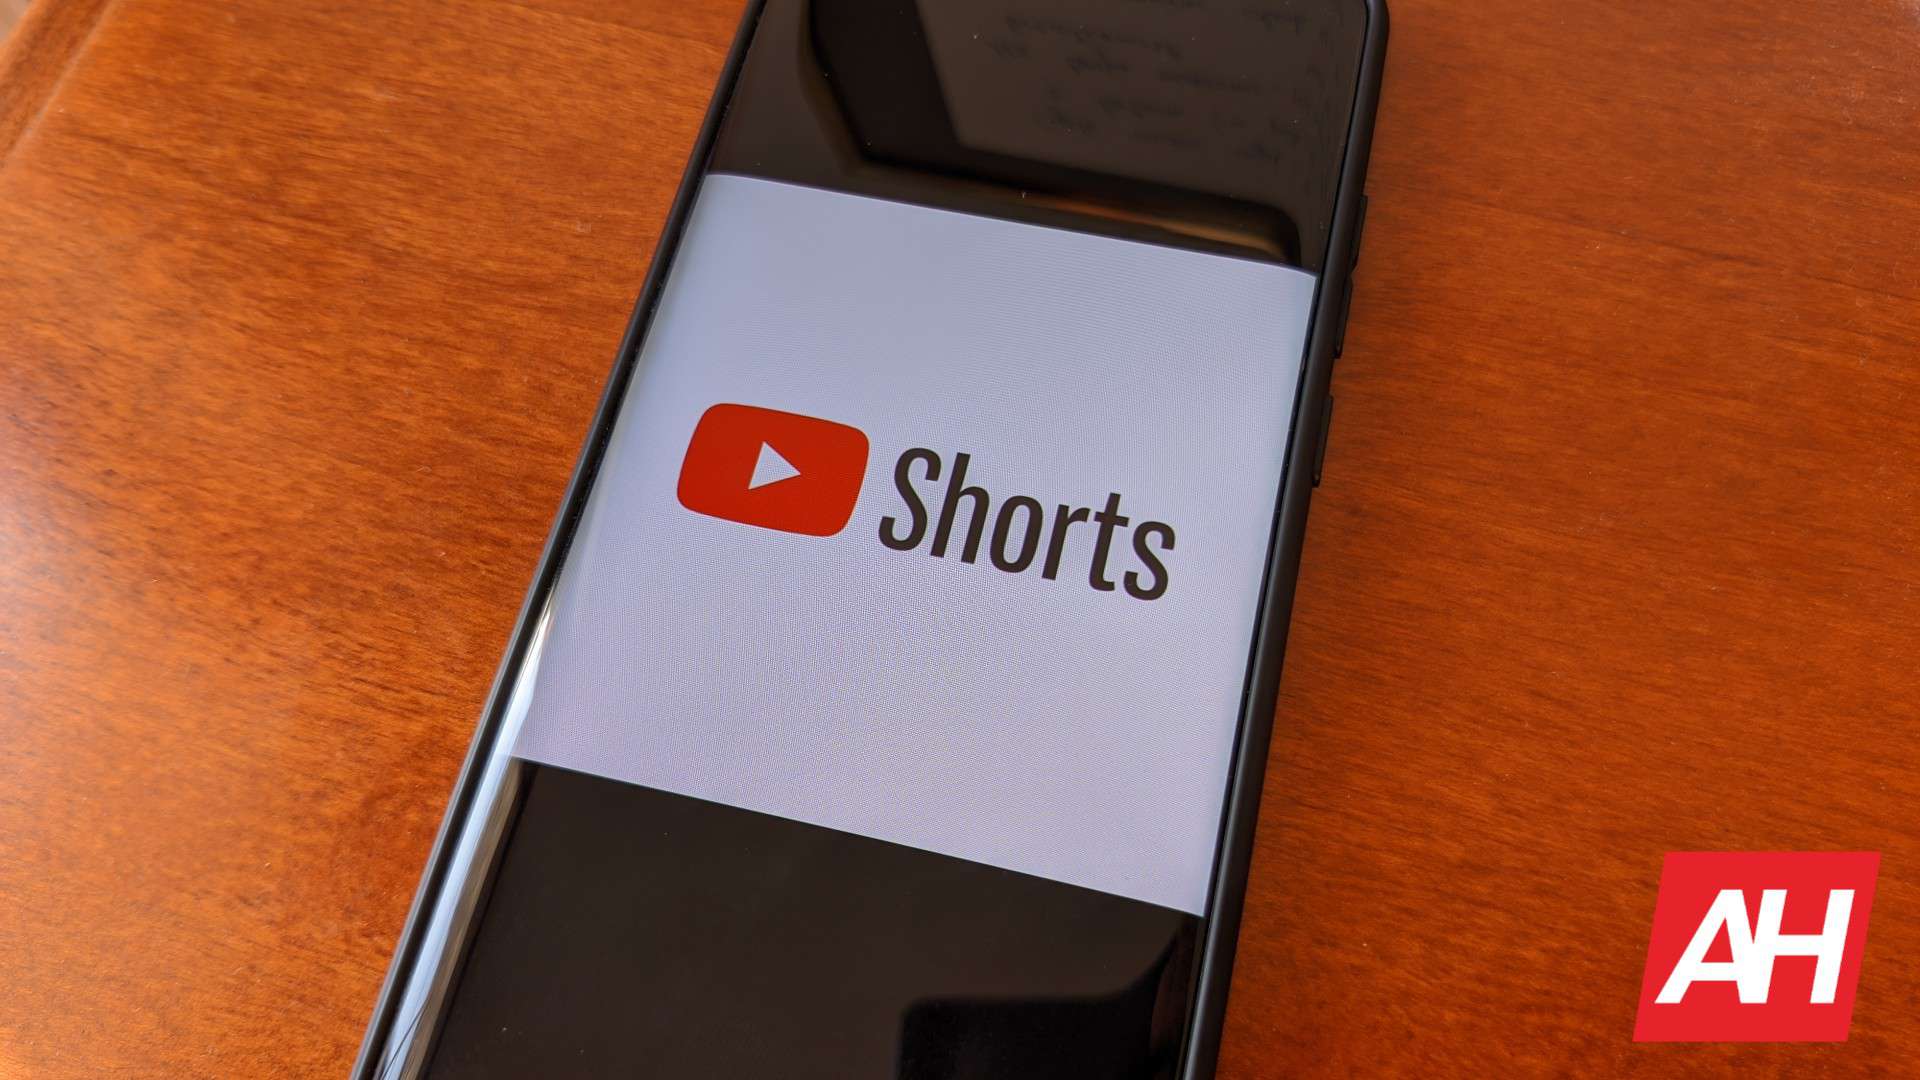 Youtube shorts 1. Ютуб Шортс. Shorts Beta. Shorts Beta youtube. Значок shorts youtube.